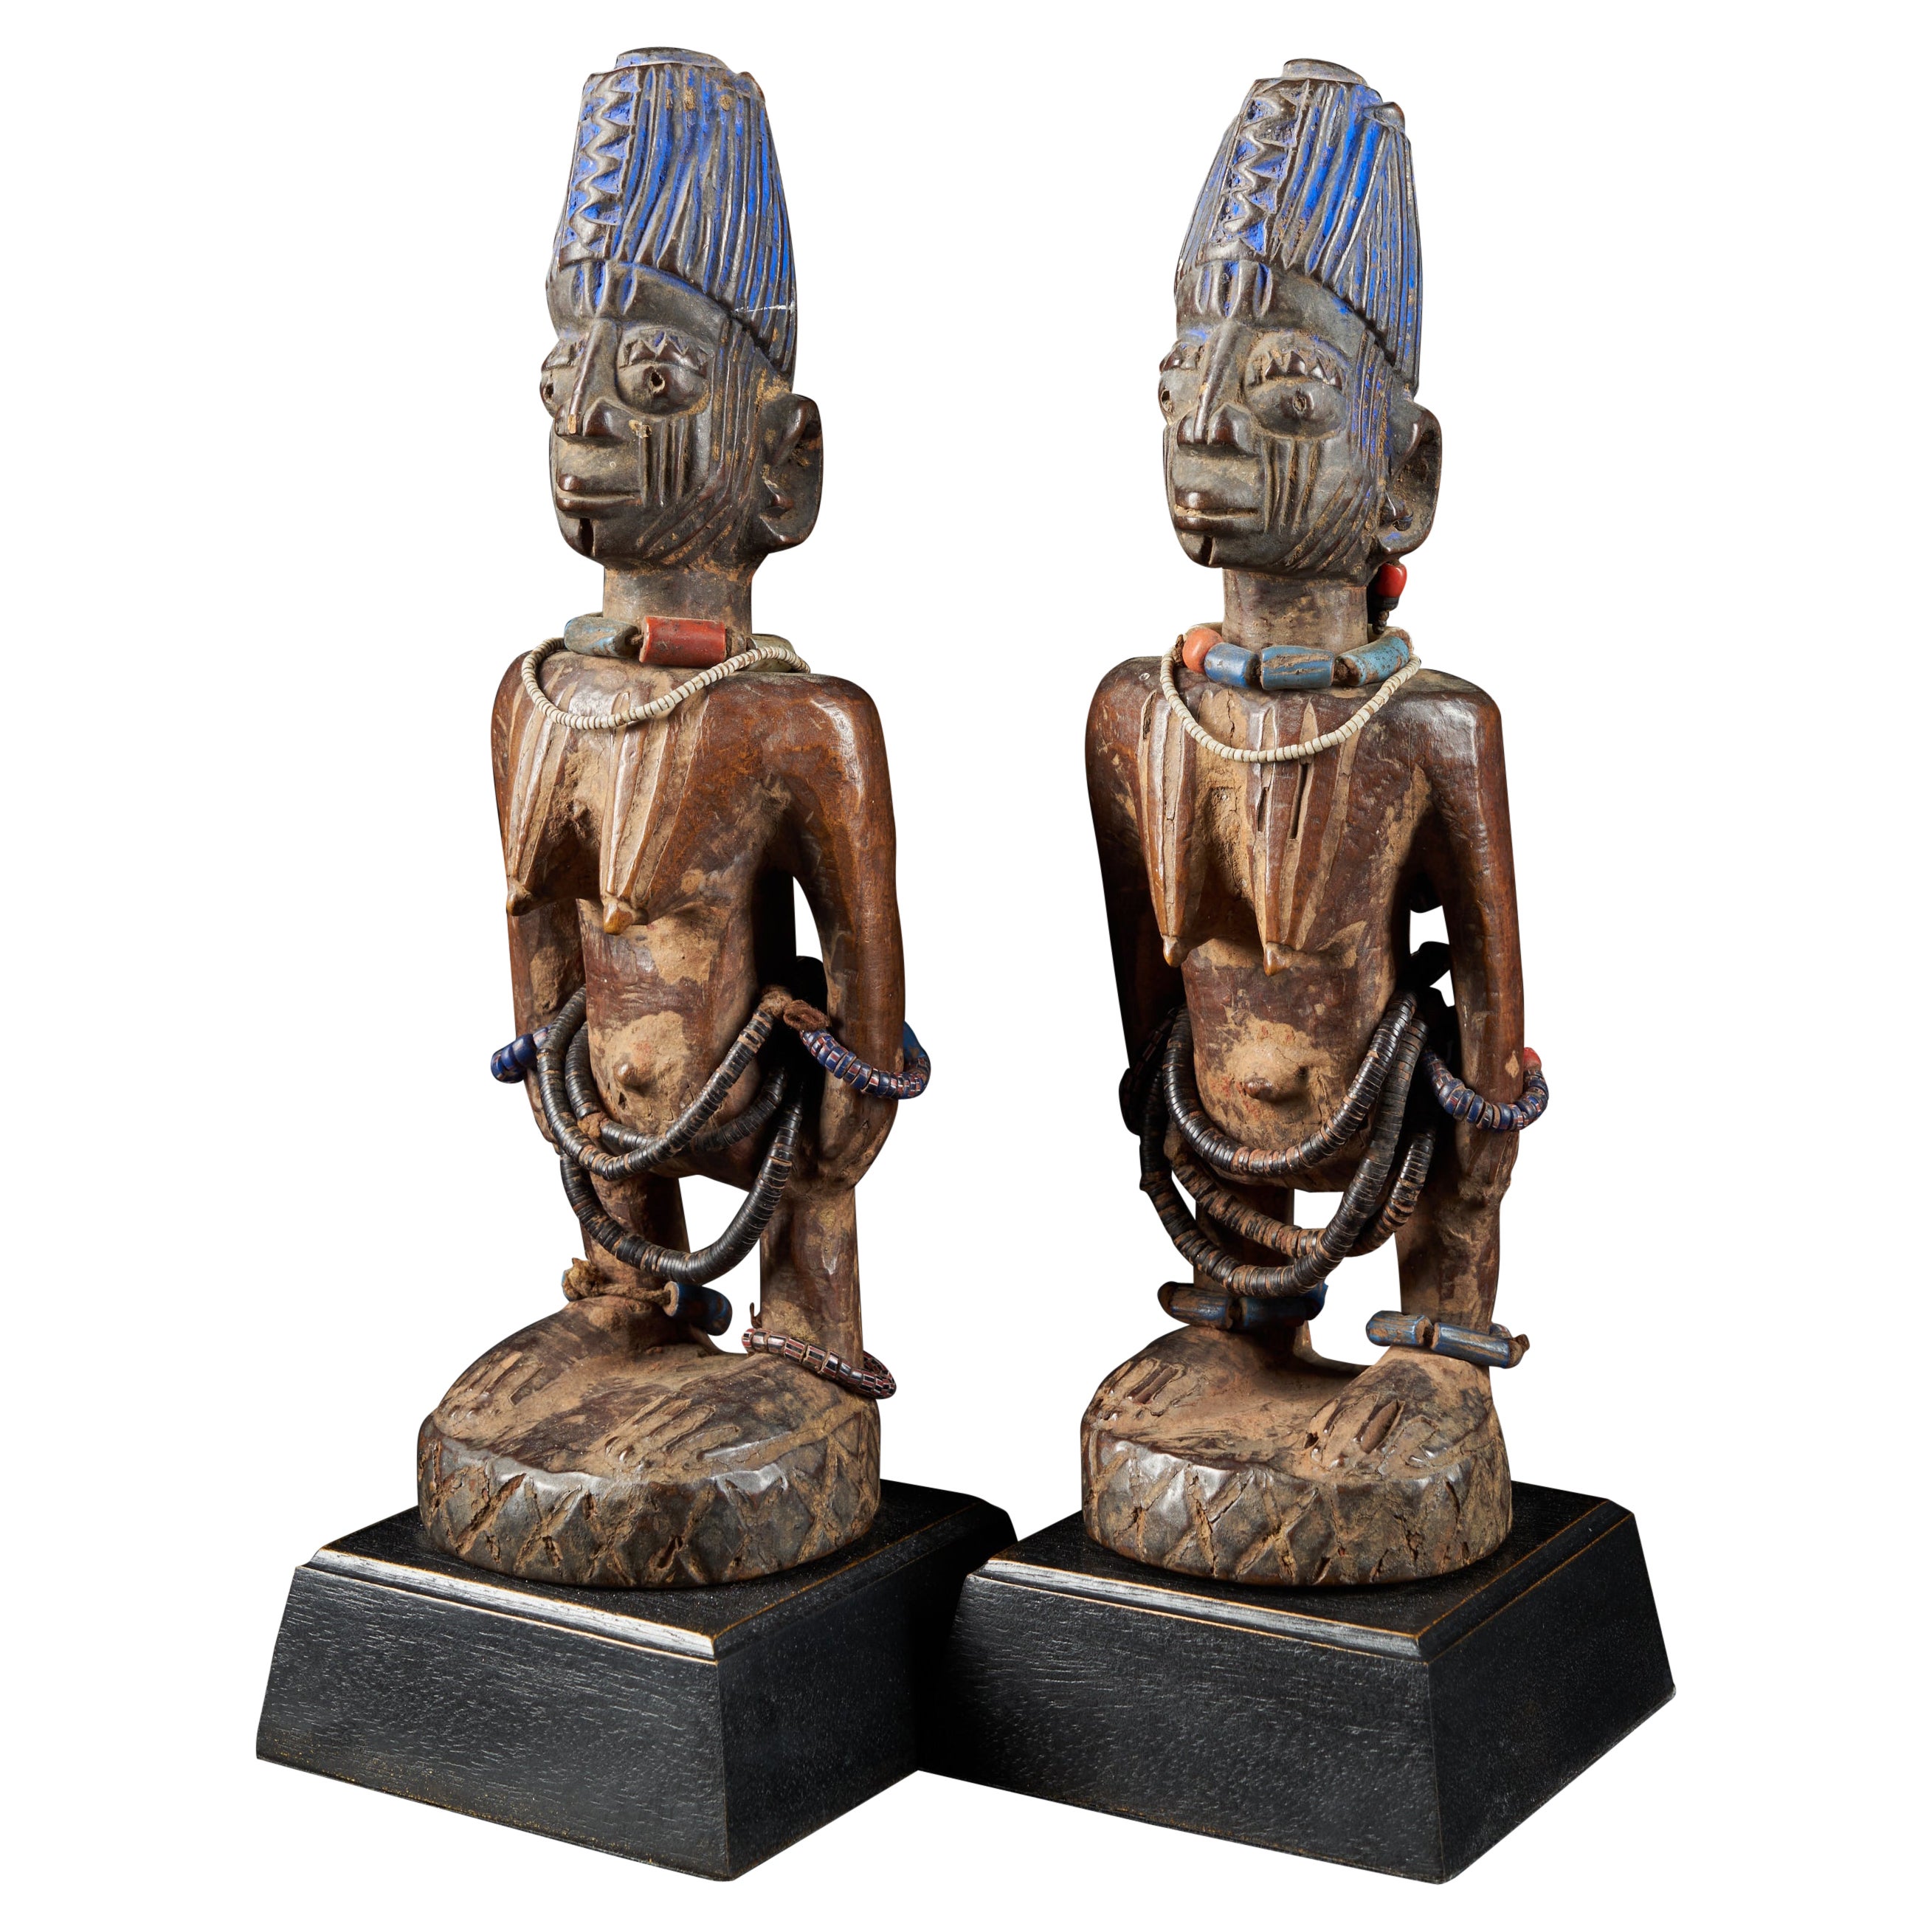 Paire de figures décoratives sculptées - Figures jumelles Ibeji, peuple Yoruba - Nigeria